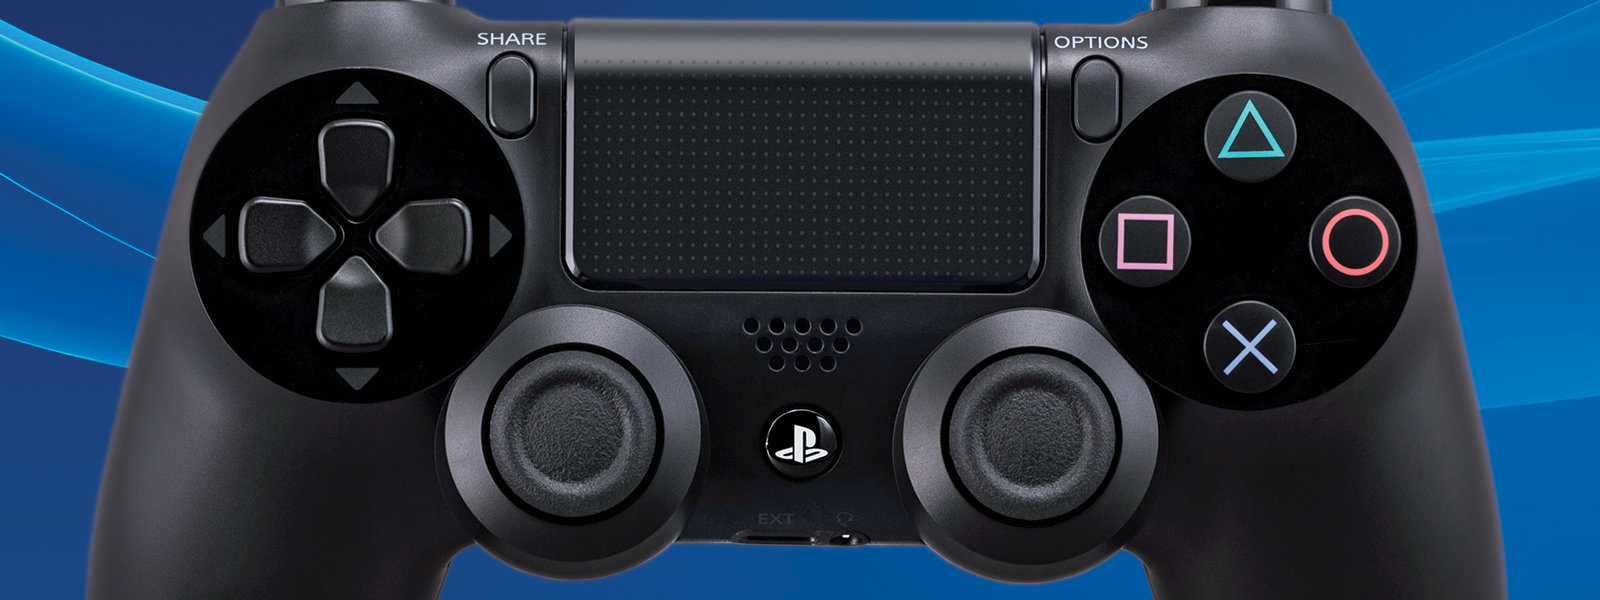 The Source Flyer Deals: Playstation 4 Dualshock 4 Controller For $39.99 ...